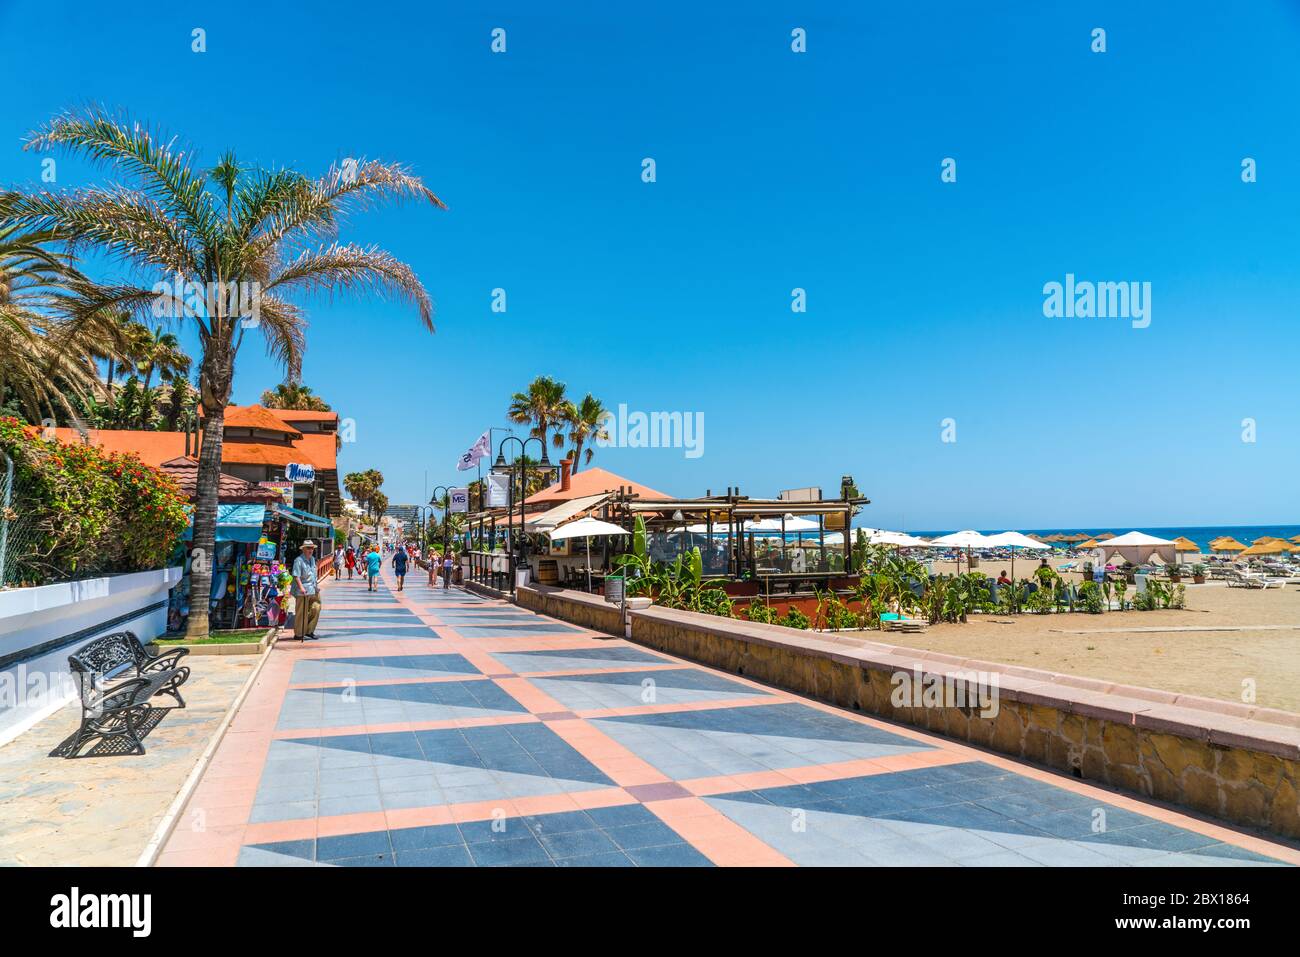 Benalmadena, Spain, june 27, 2017: Tourists strawling on the Benalmadena boulevard near Malaga Stock Photo